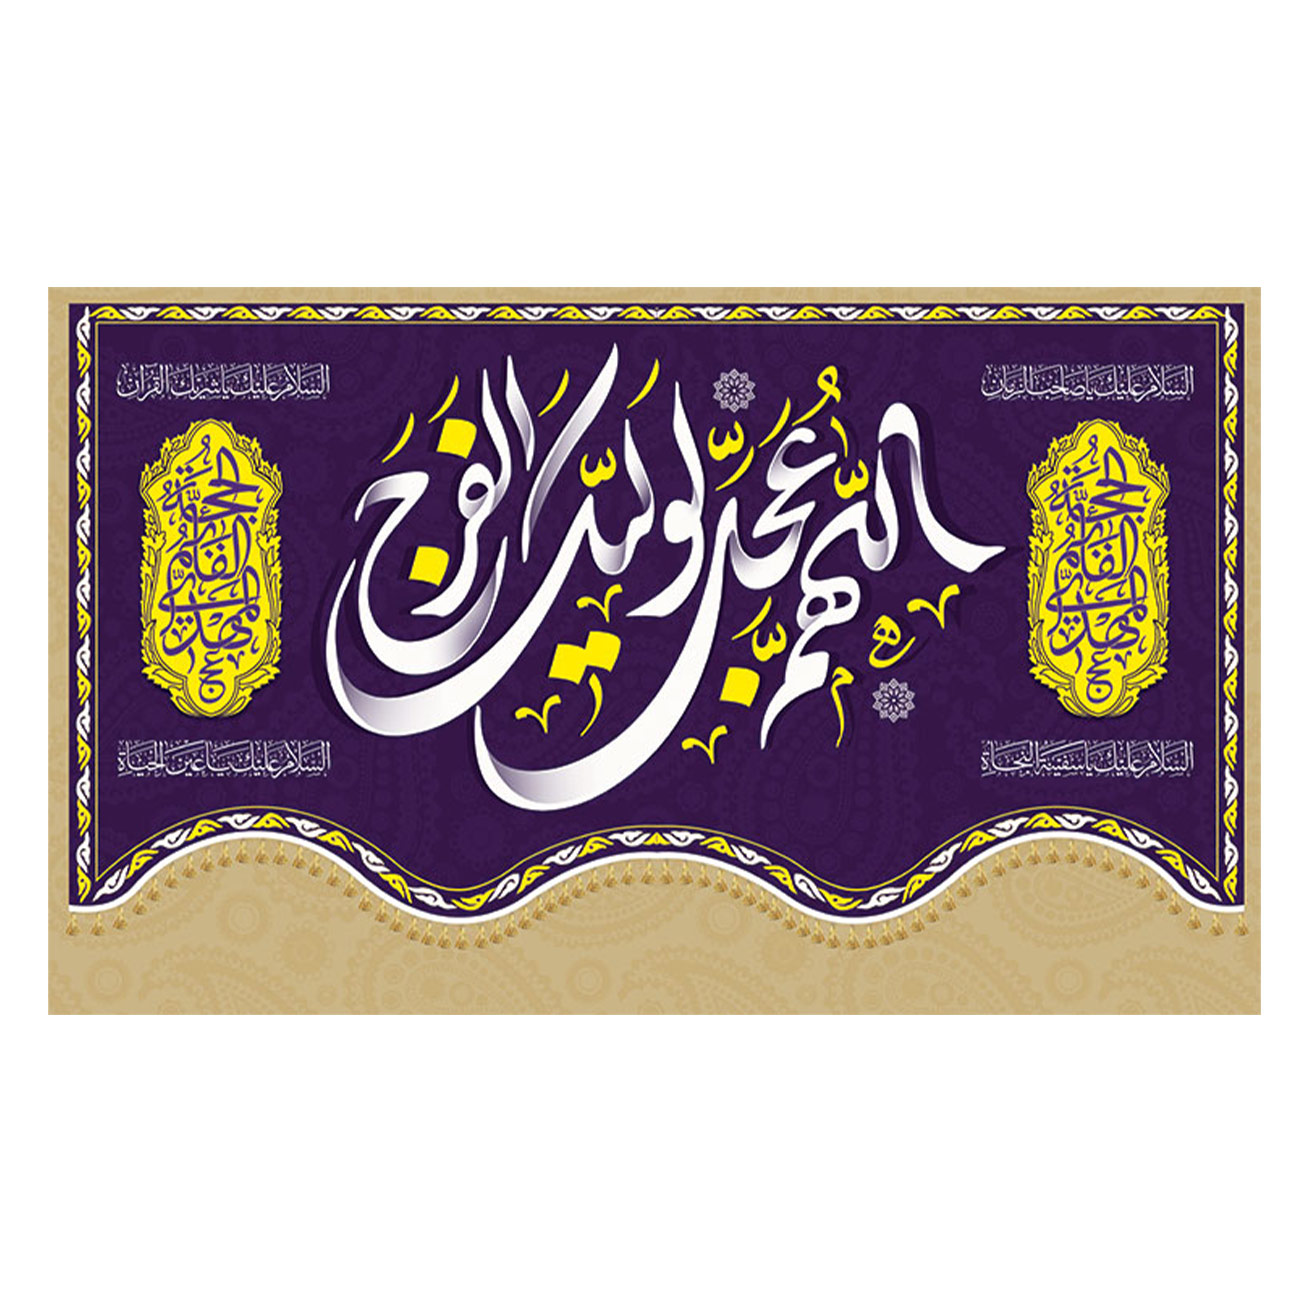 پرچم طرح نیمه شعبان مدل اللهم عجل لولیک الفرج کد 2345D